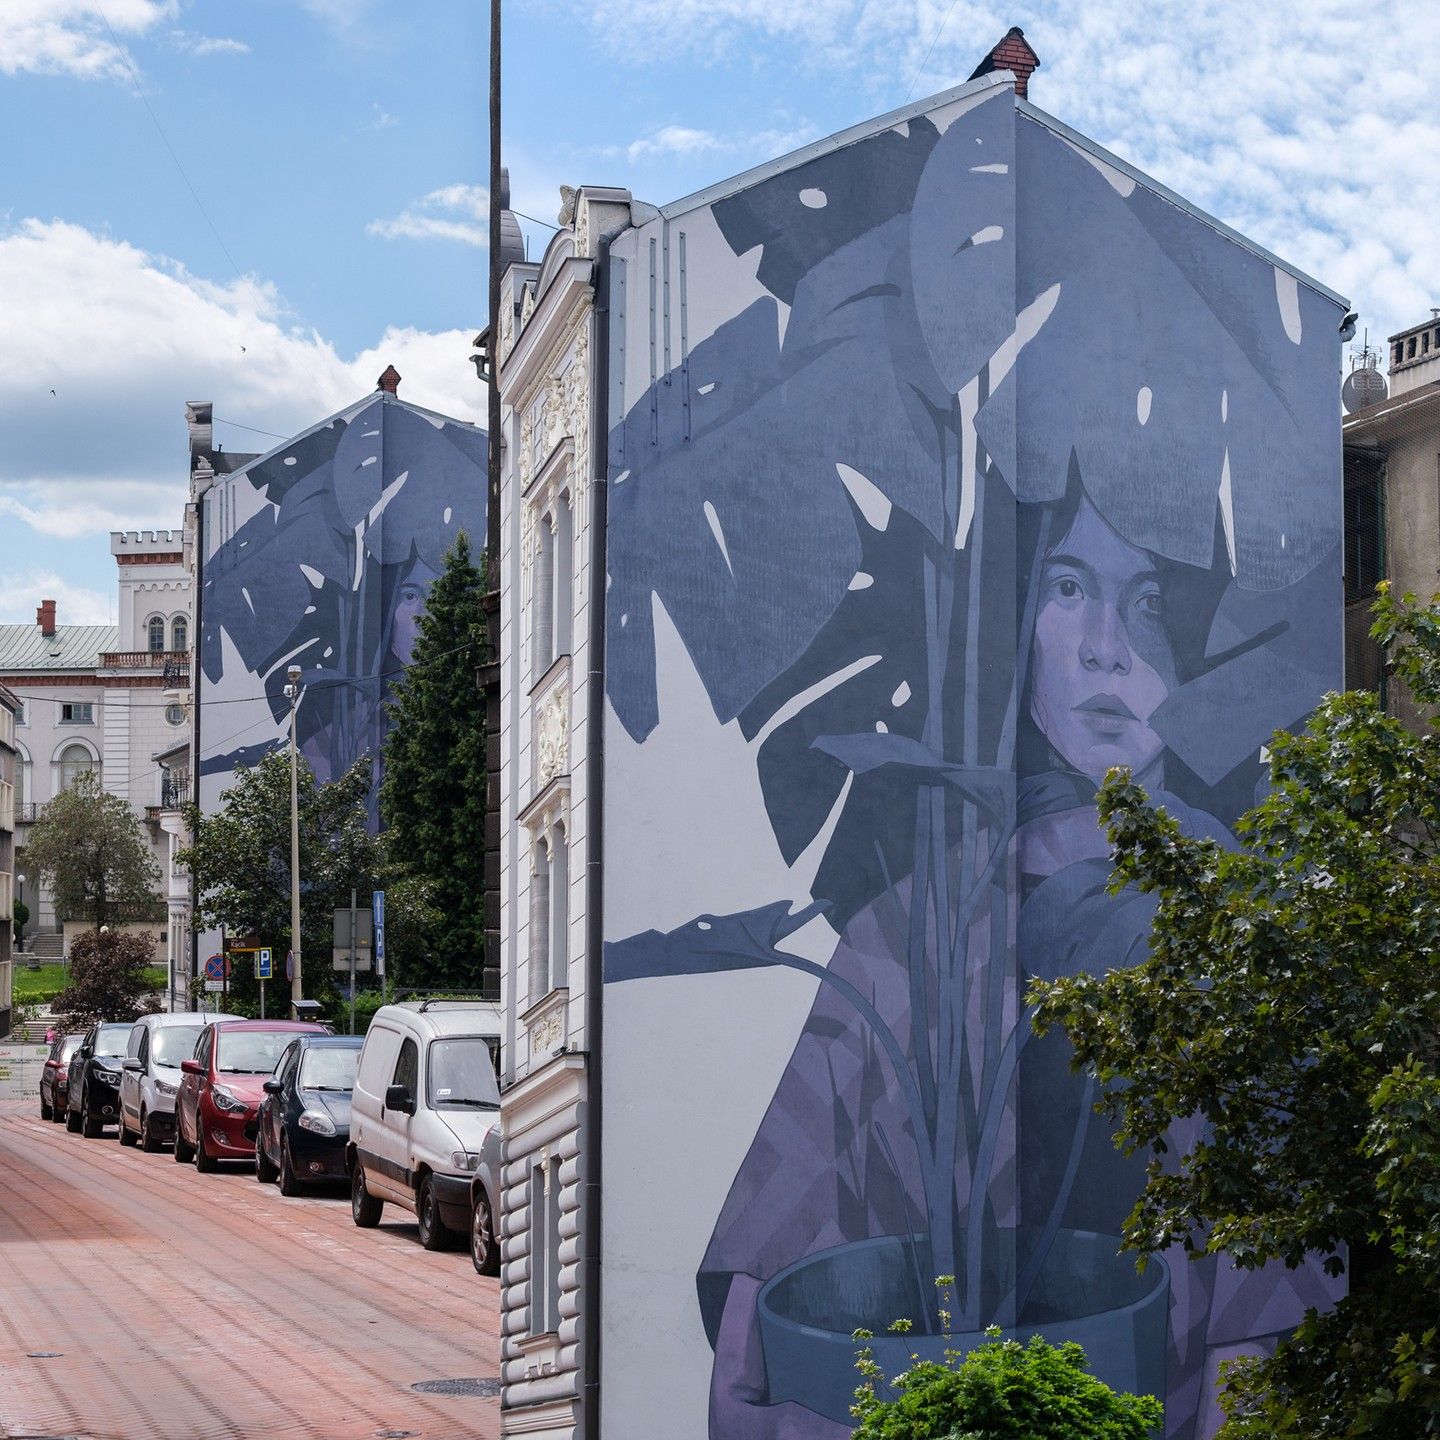 Blue Monday 

#bielskobiala #mural #streetart #poland